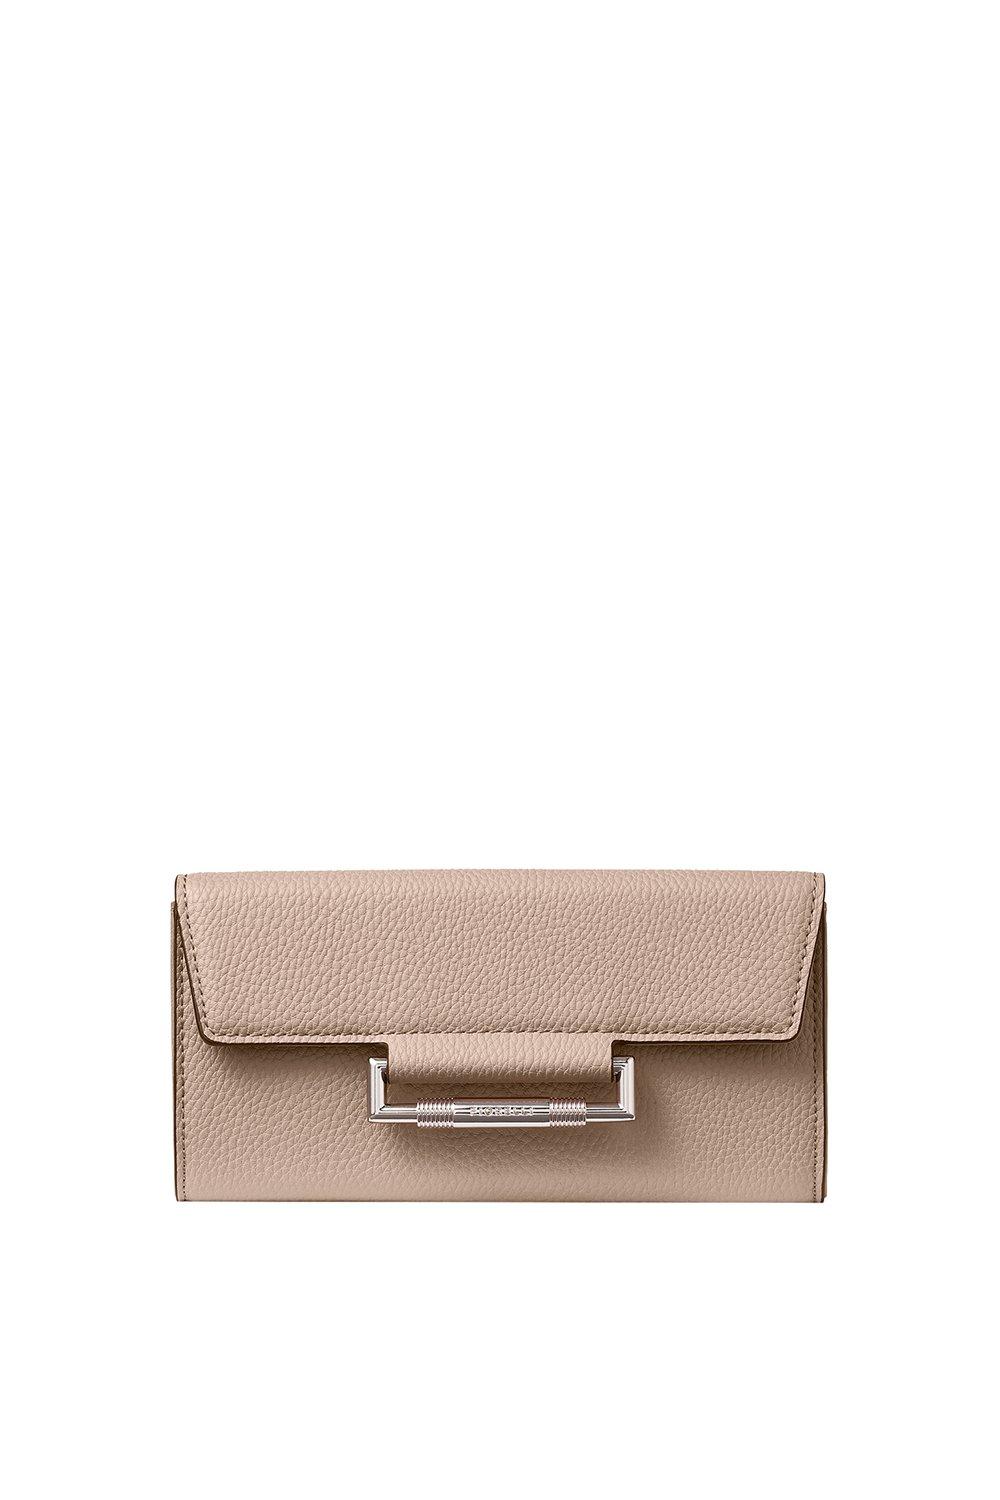 Amazon.com: Fiorelli Handbags For Women